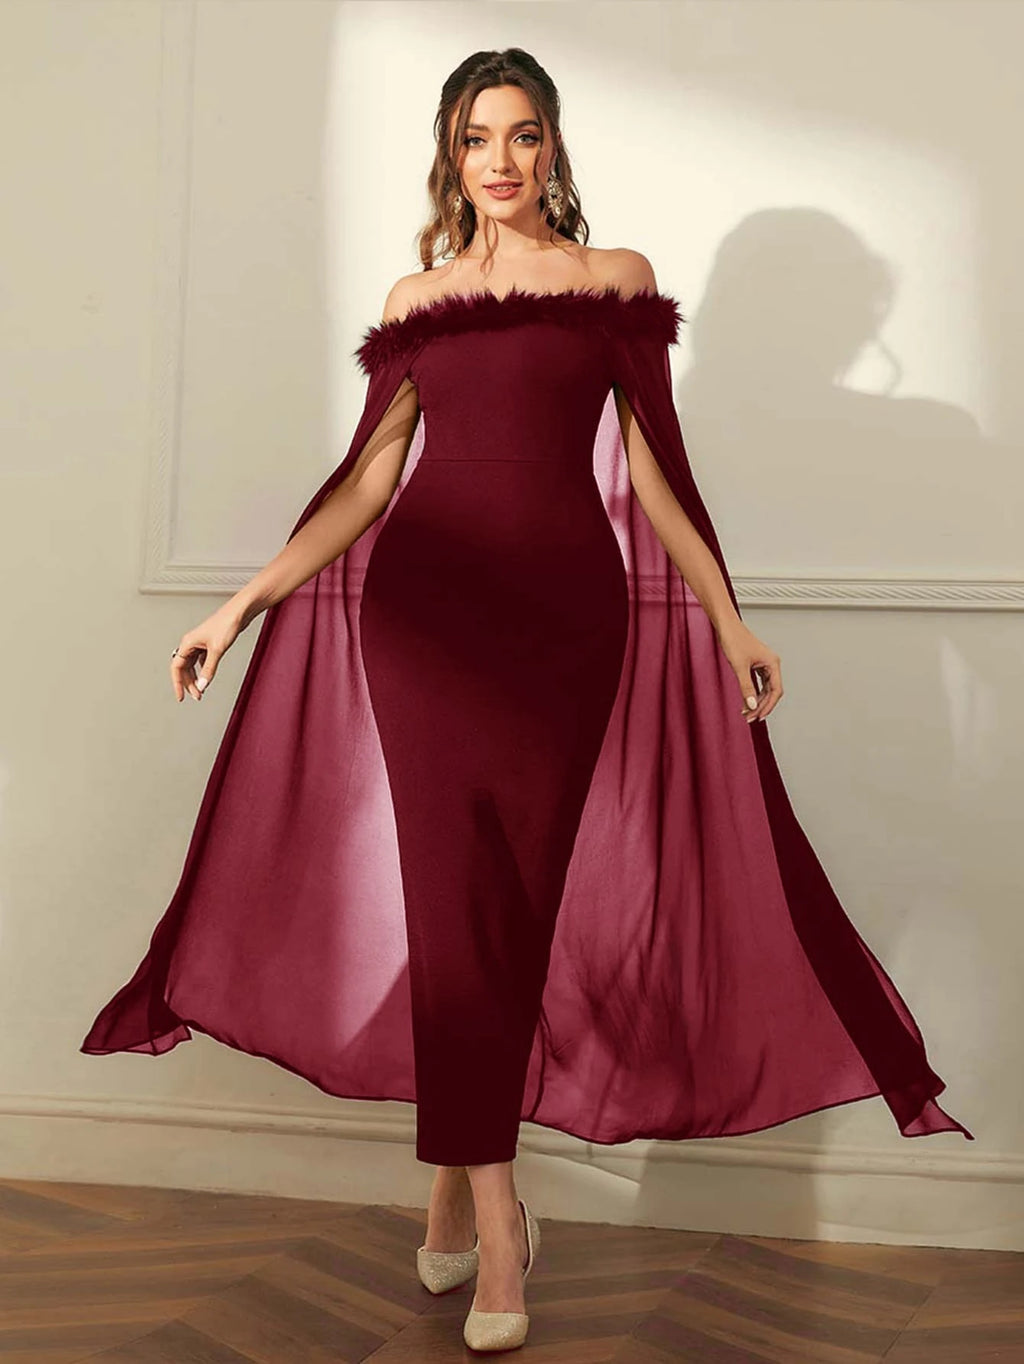 SheIn NWT Burgundy One Shoulder Formal Dress Red - $19 (58